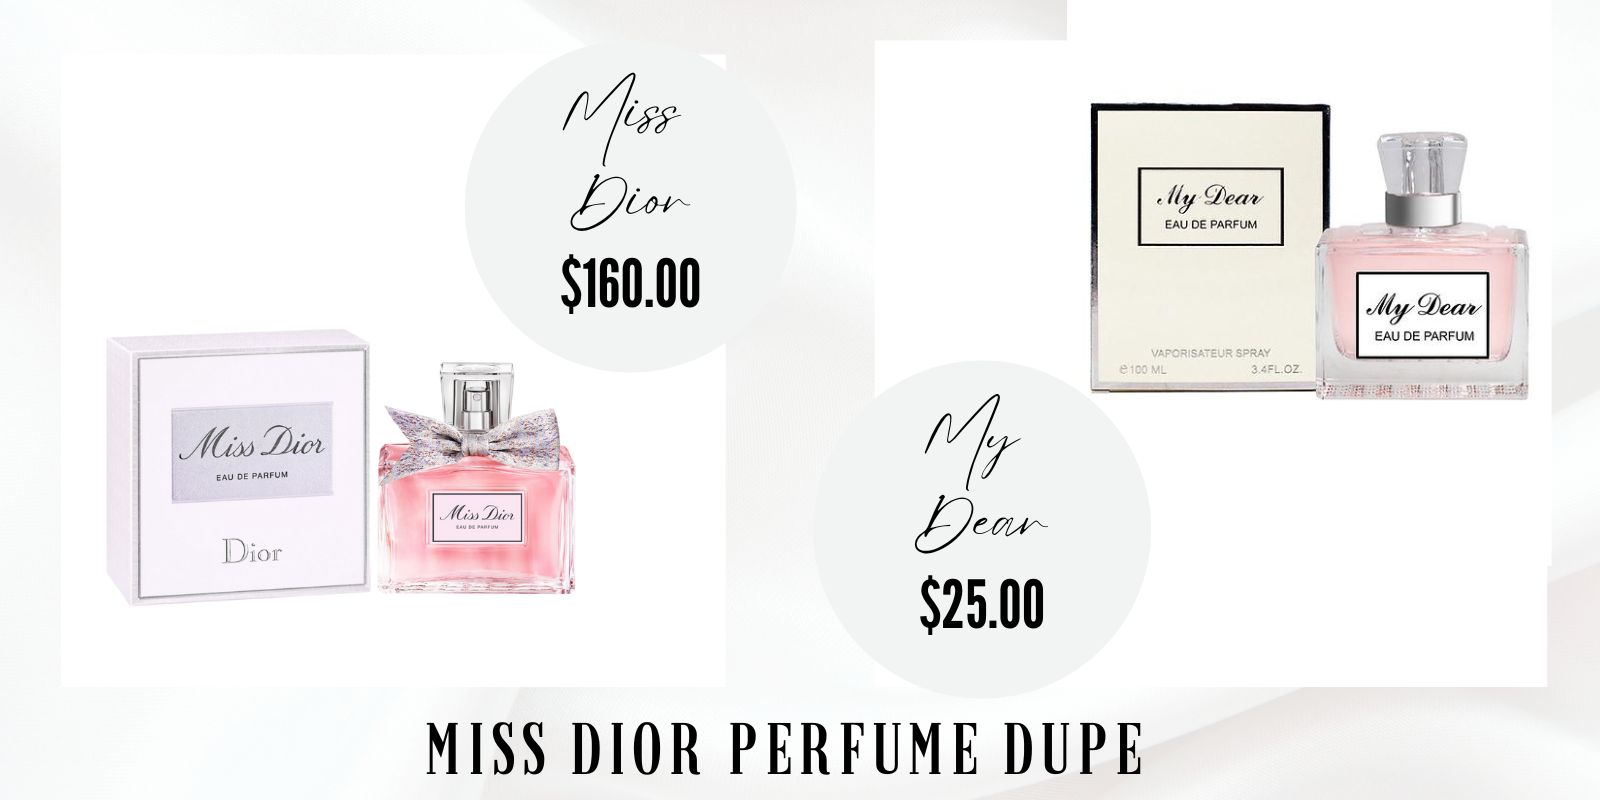 Miss Dior Perfume Dupe: My Dear Eau de Parfum